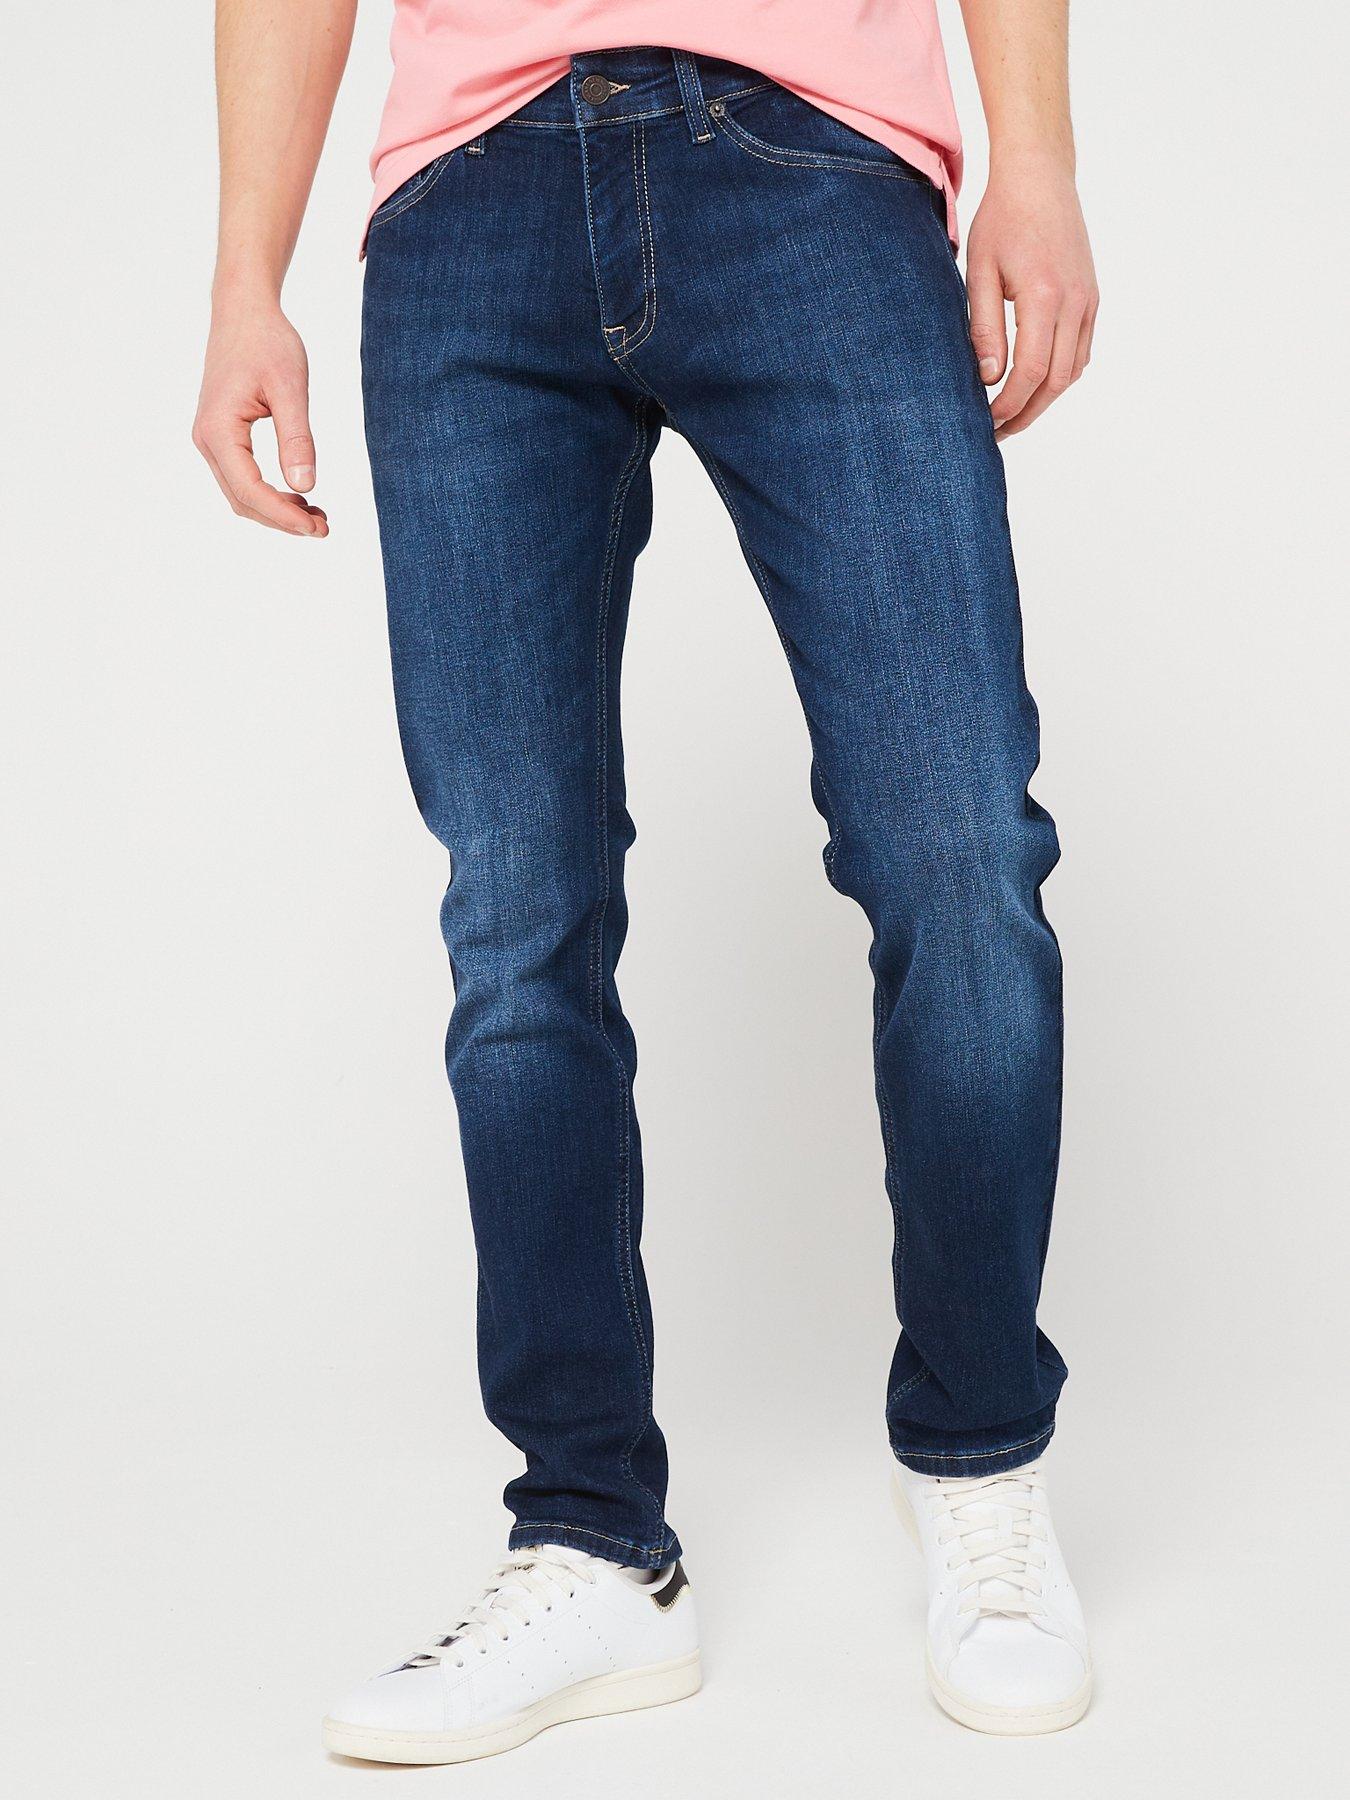 | Jeans Men | | Slim Tommy Fit Jeans hilfiger